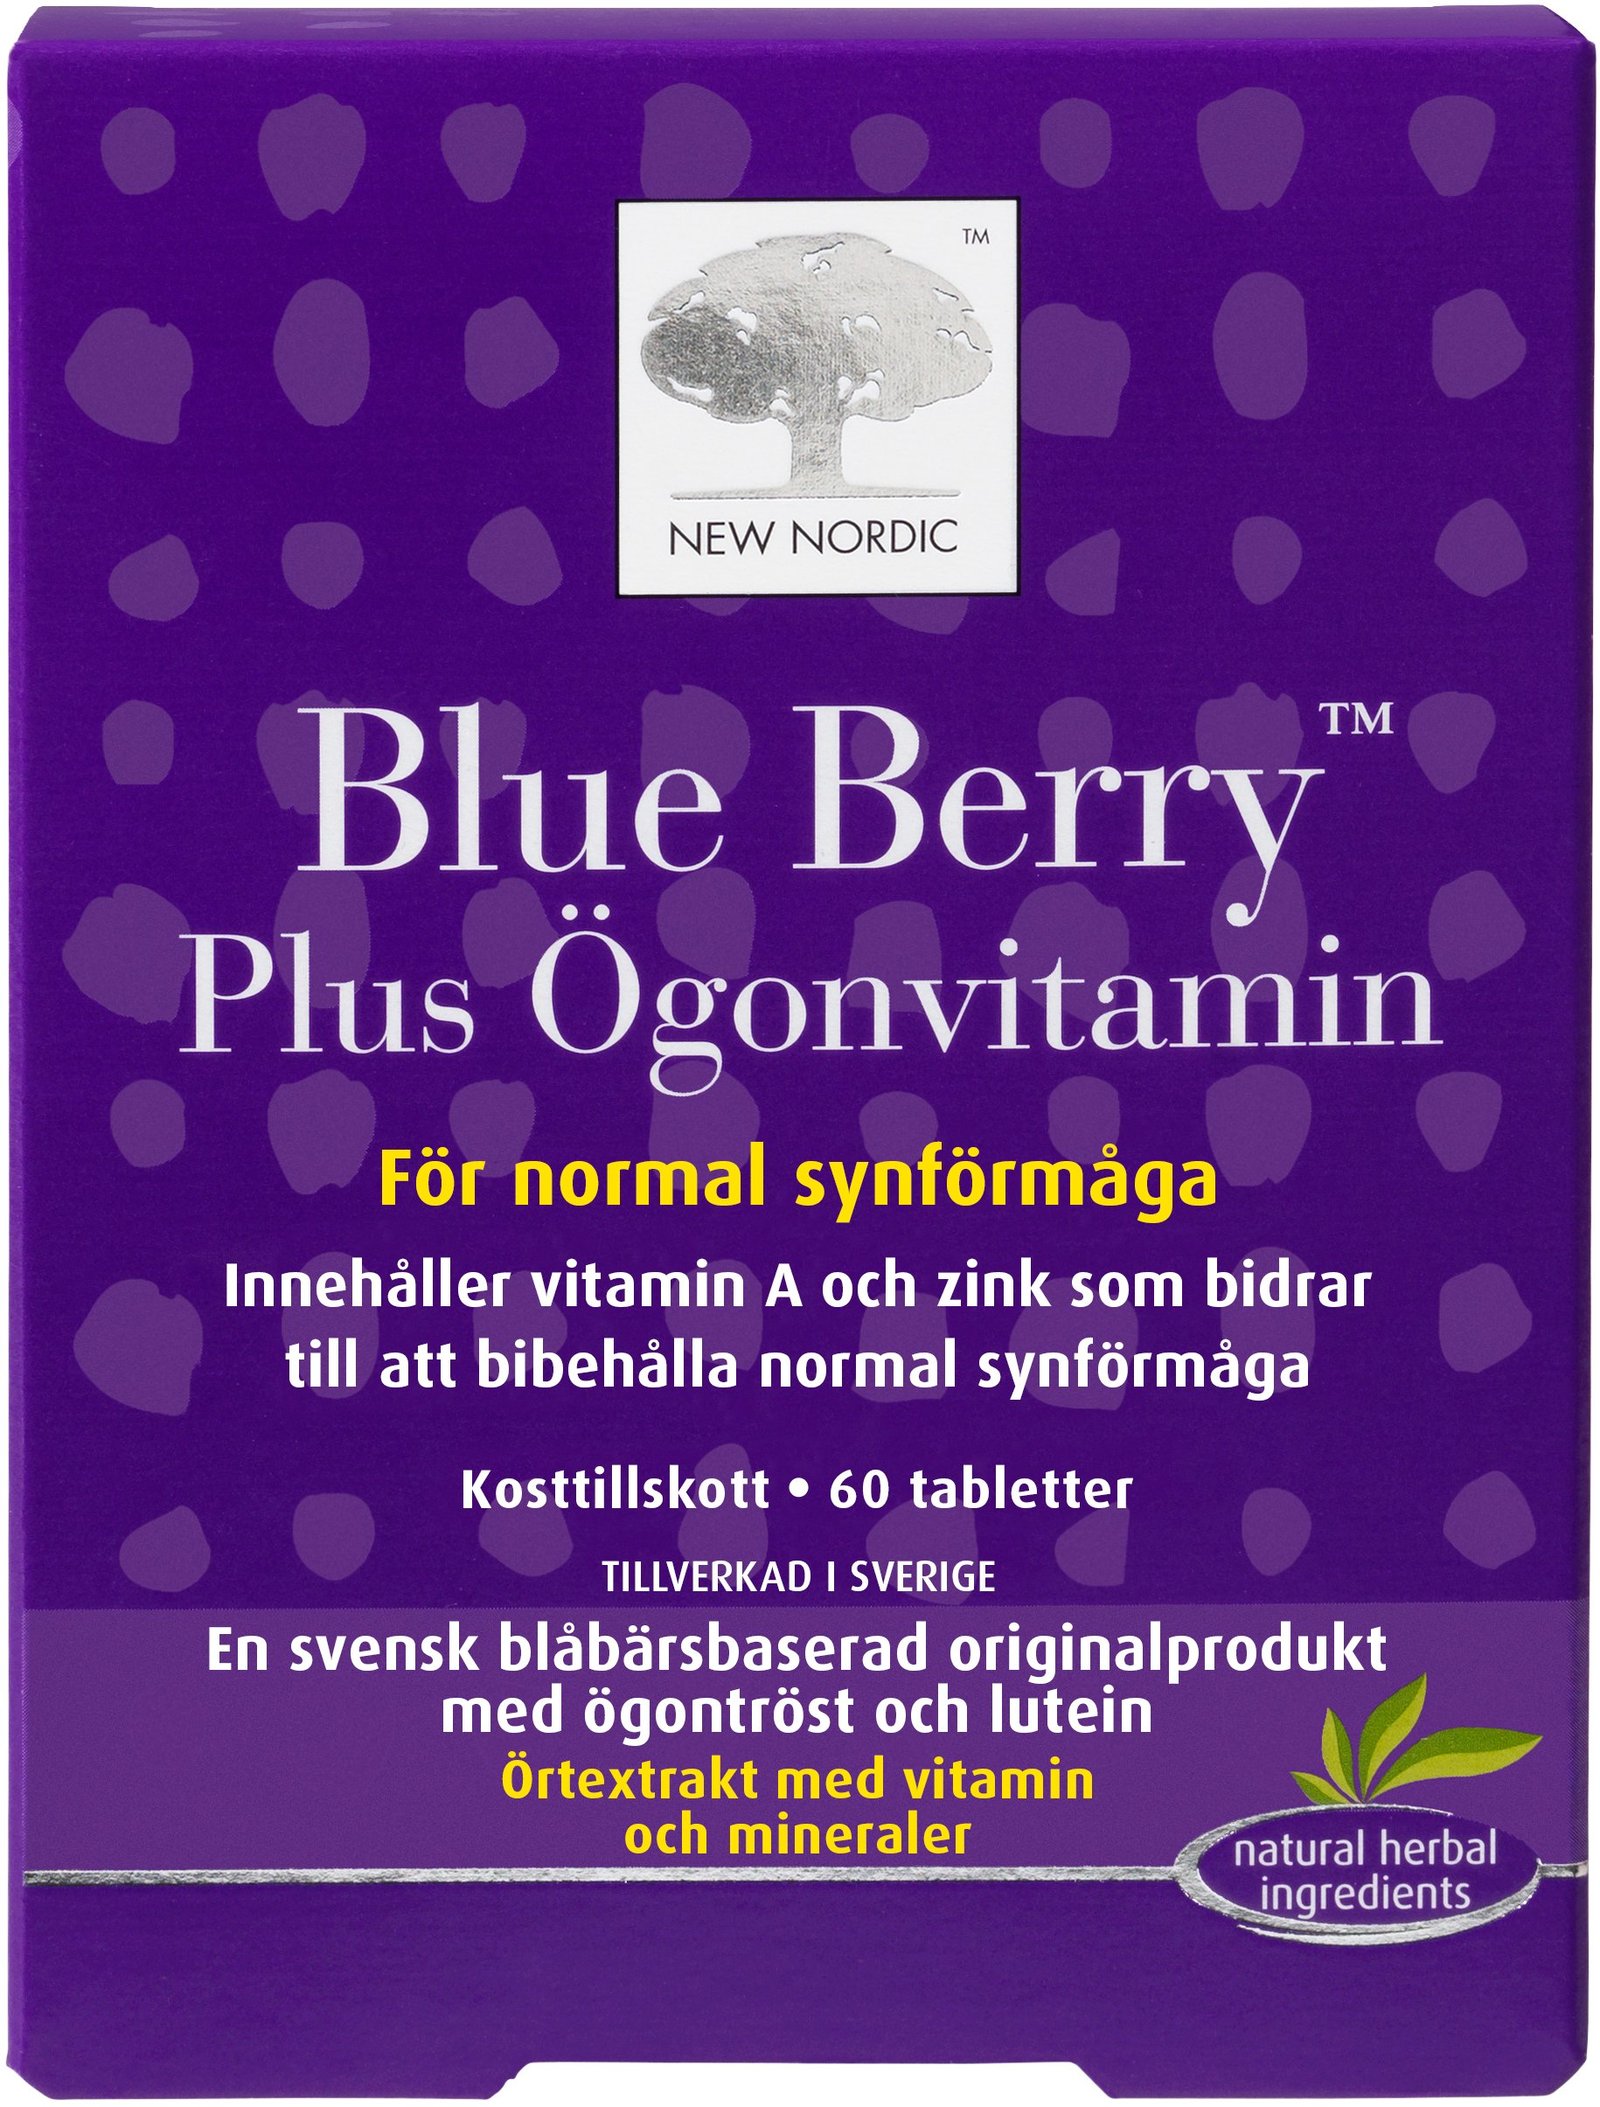 Blue Berry Plus ögonvitamin 60 st